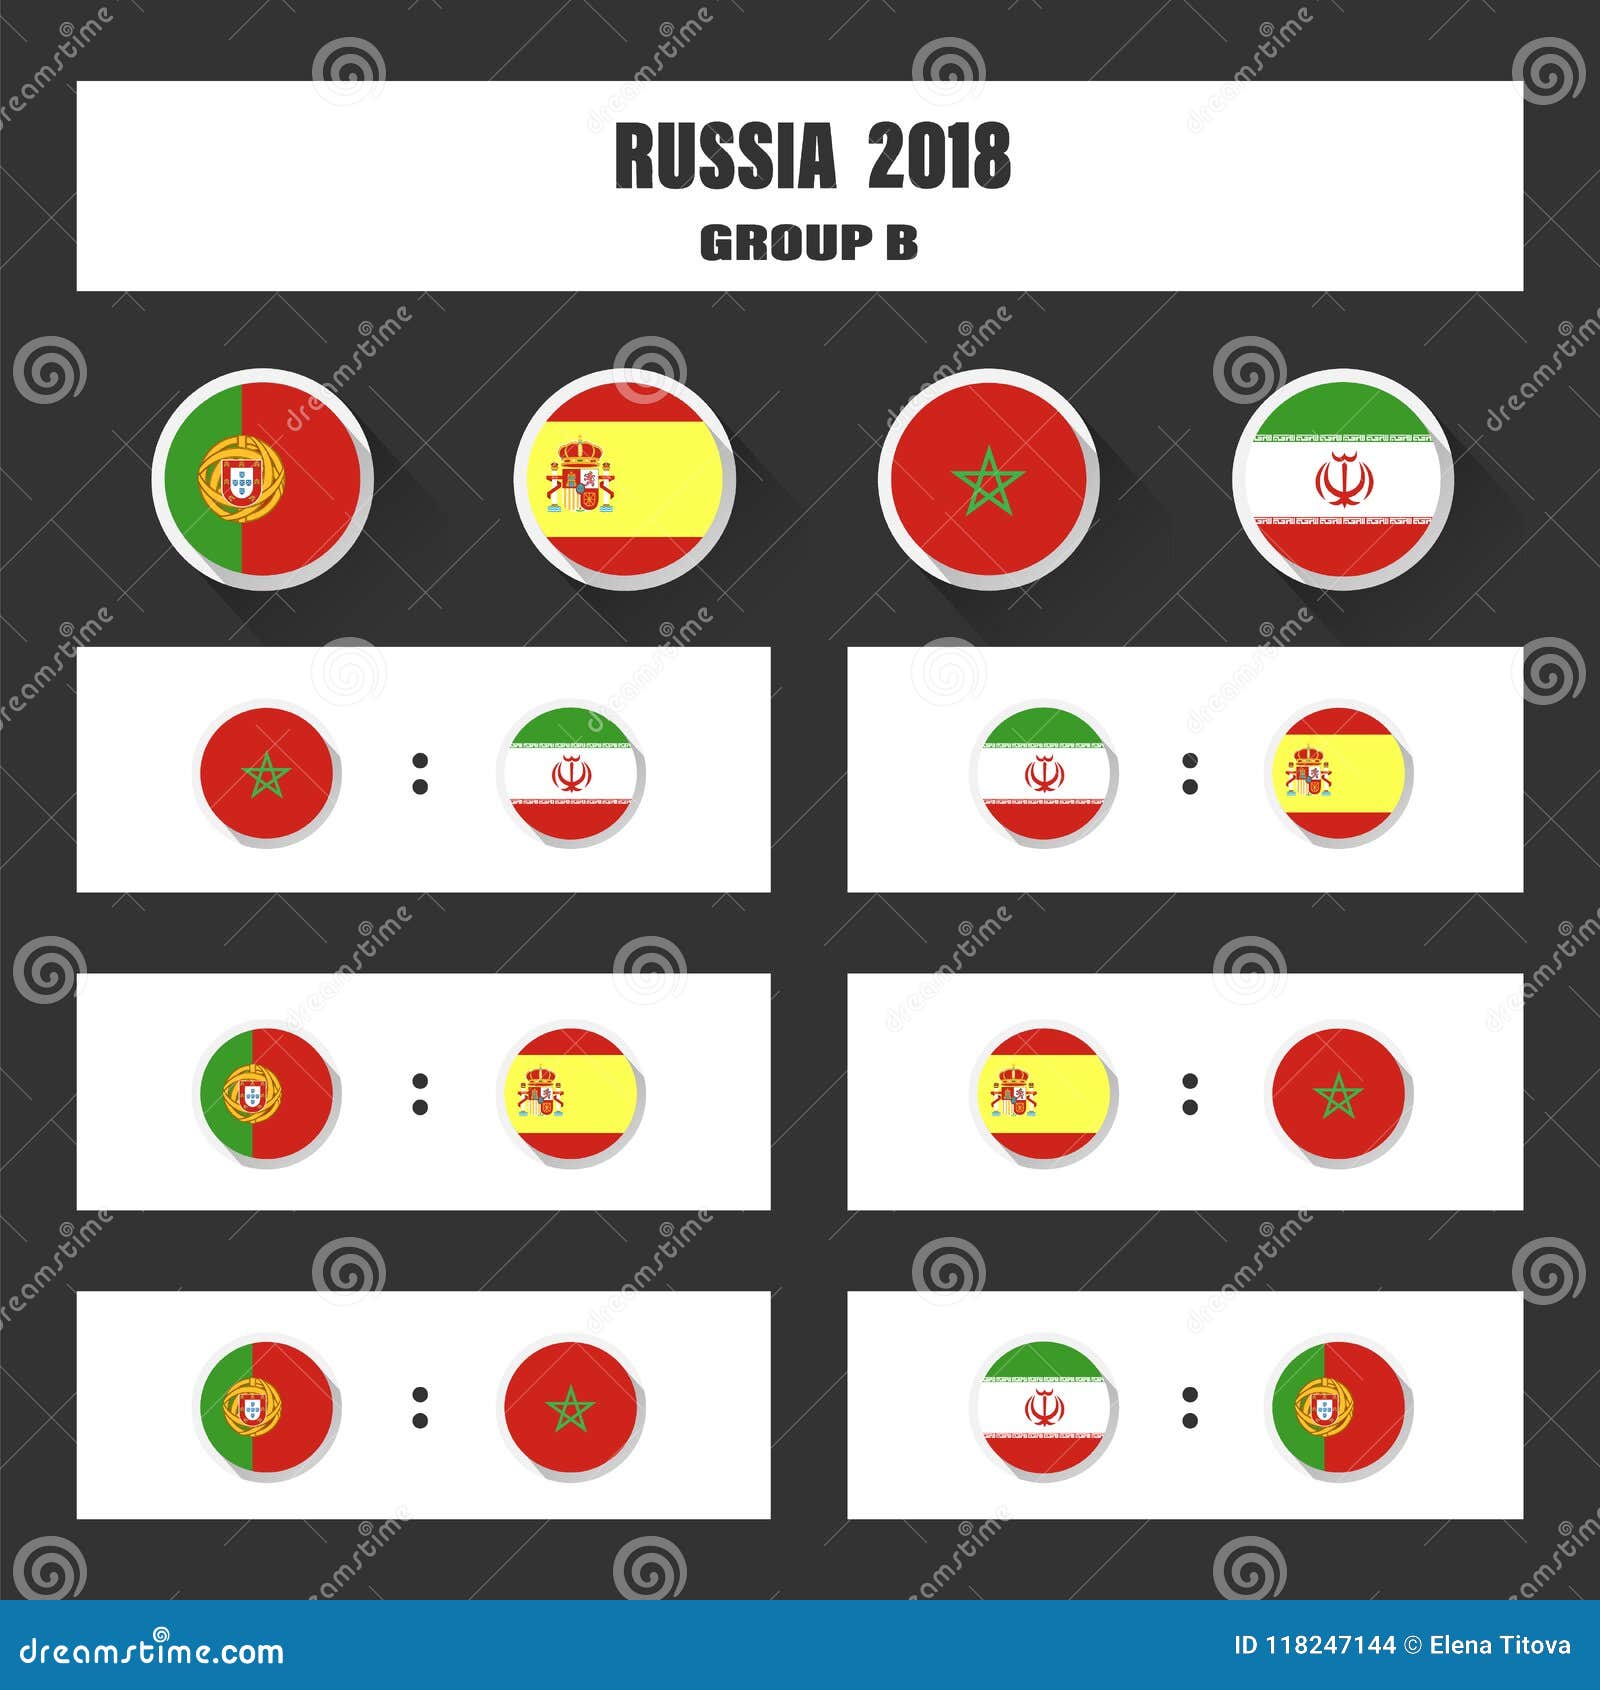 Tabela de pontos de críquete dos países participantes campeonato